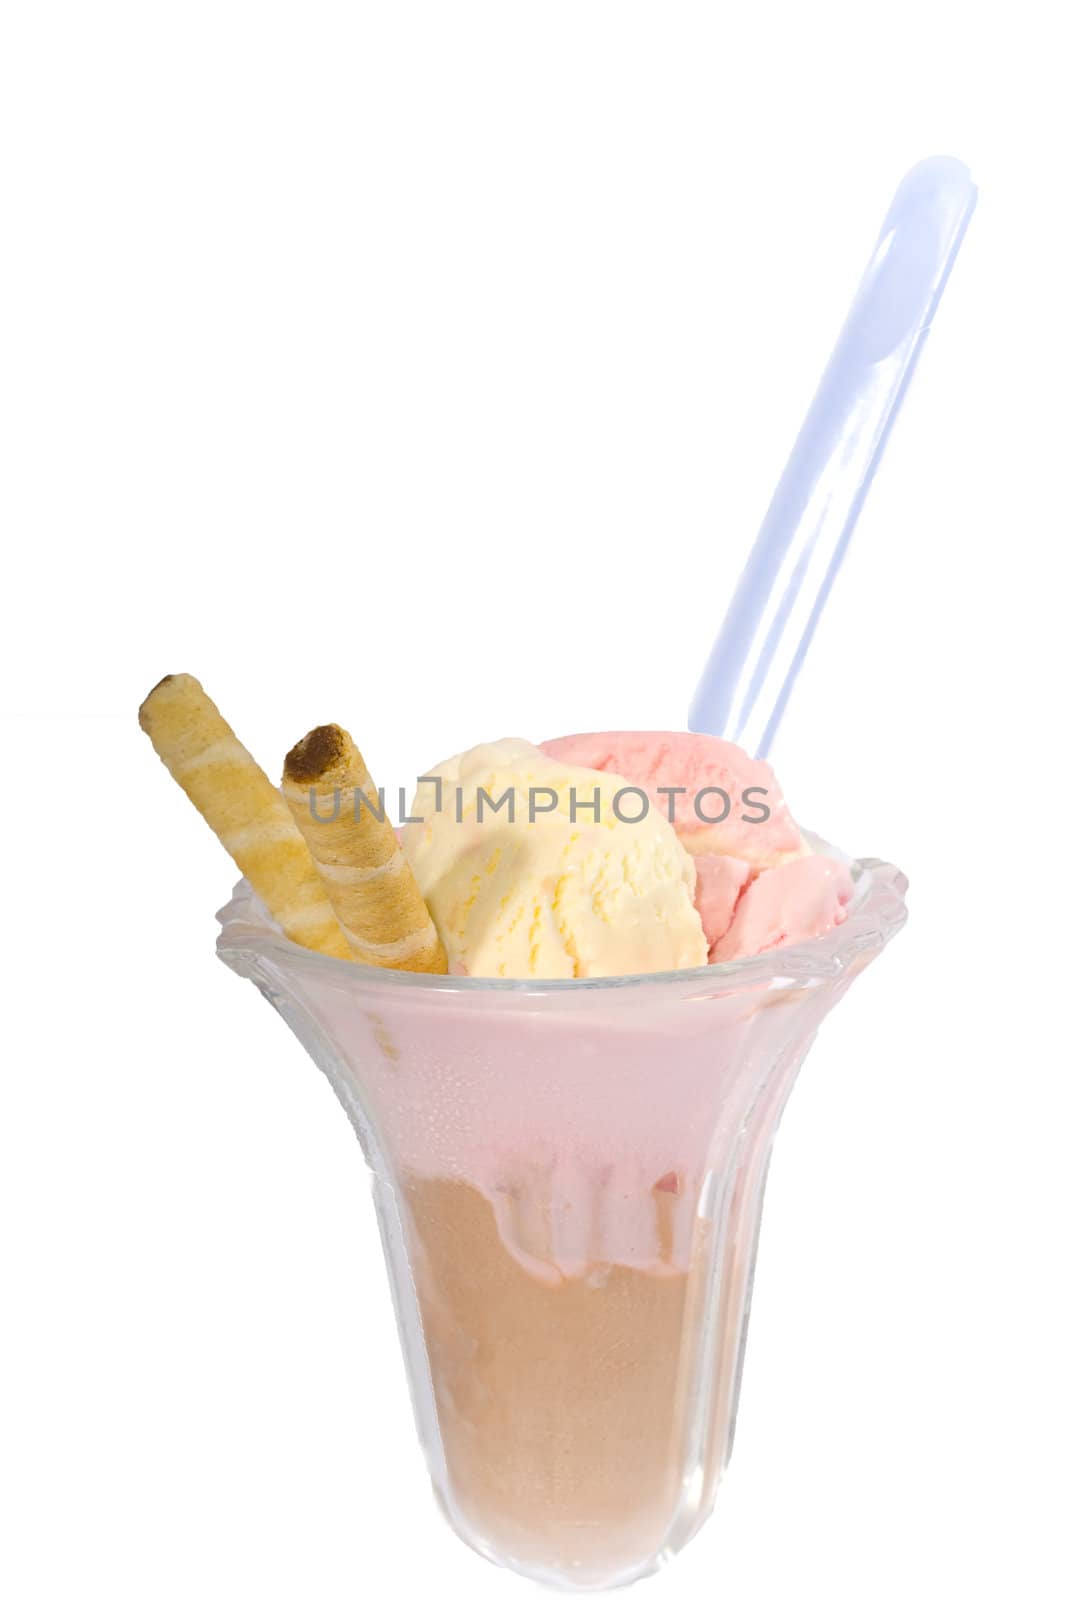 Ice-cream in glass